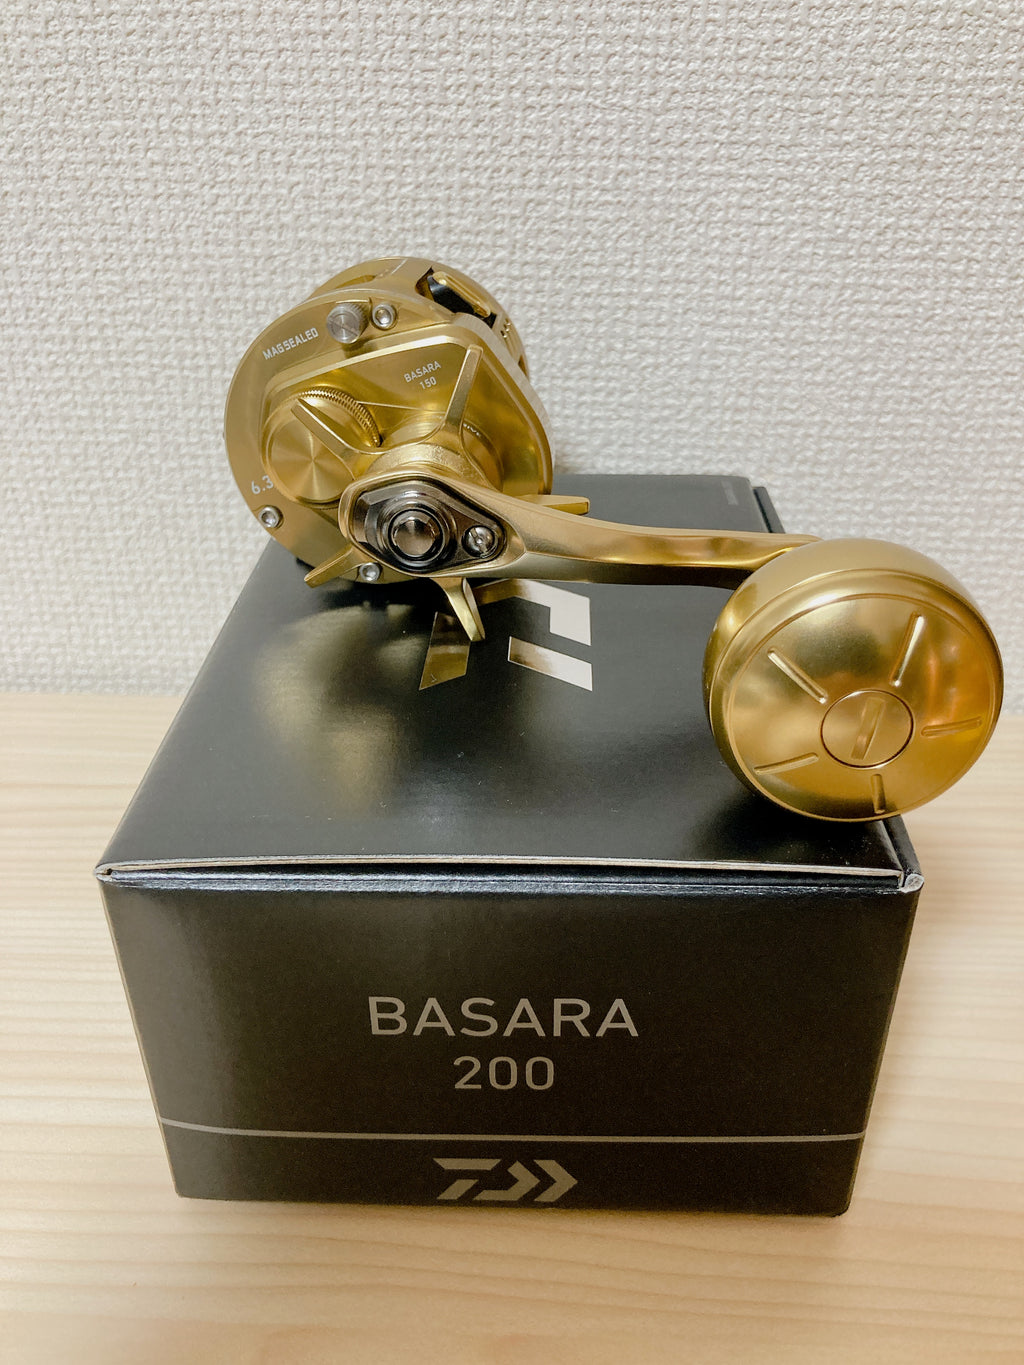 Daiwa Baitcasting Reel 21 Basara 200 Right Gear Ratio 6.3:1 Fishing Re